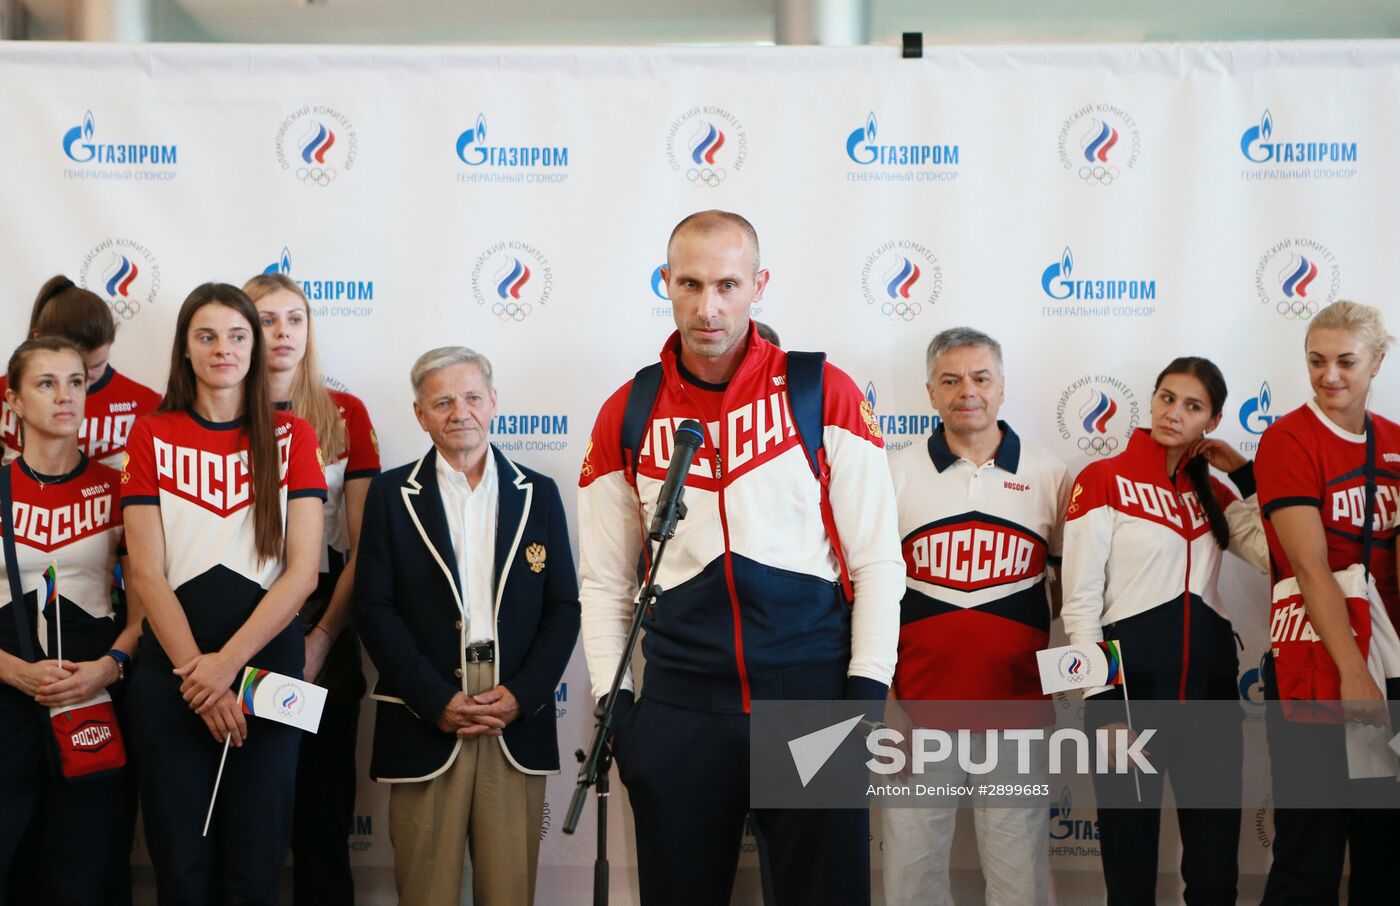 Russian Olympic team departs for Rio de Janeiro